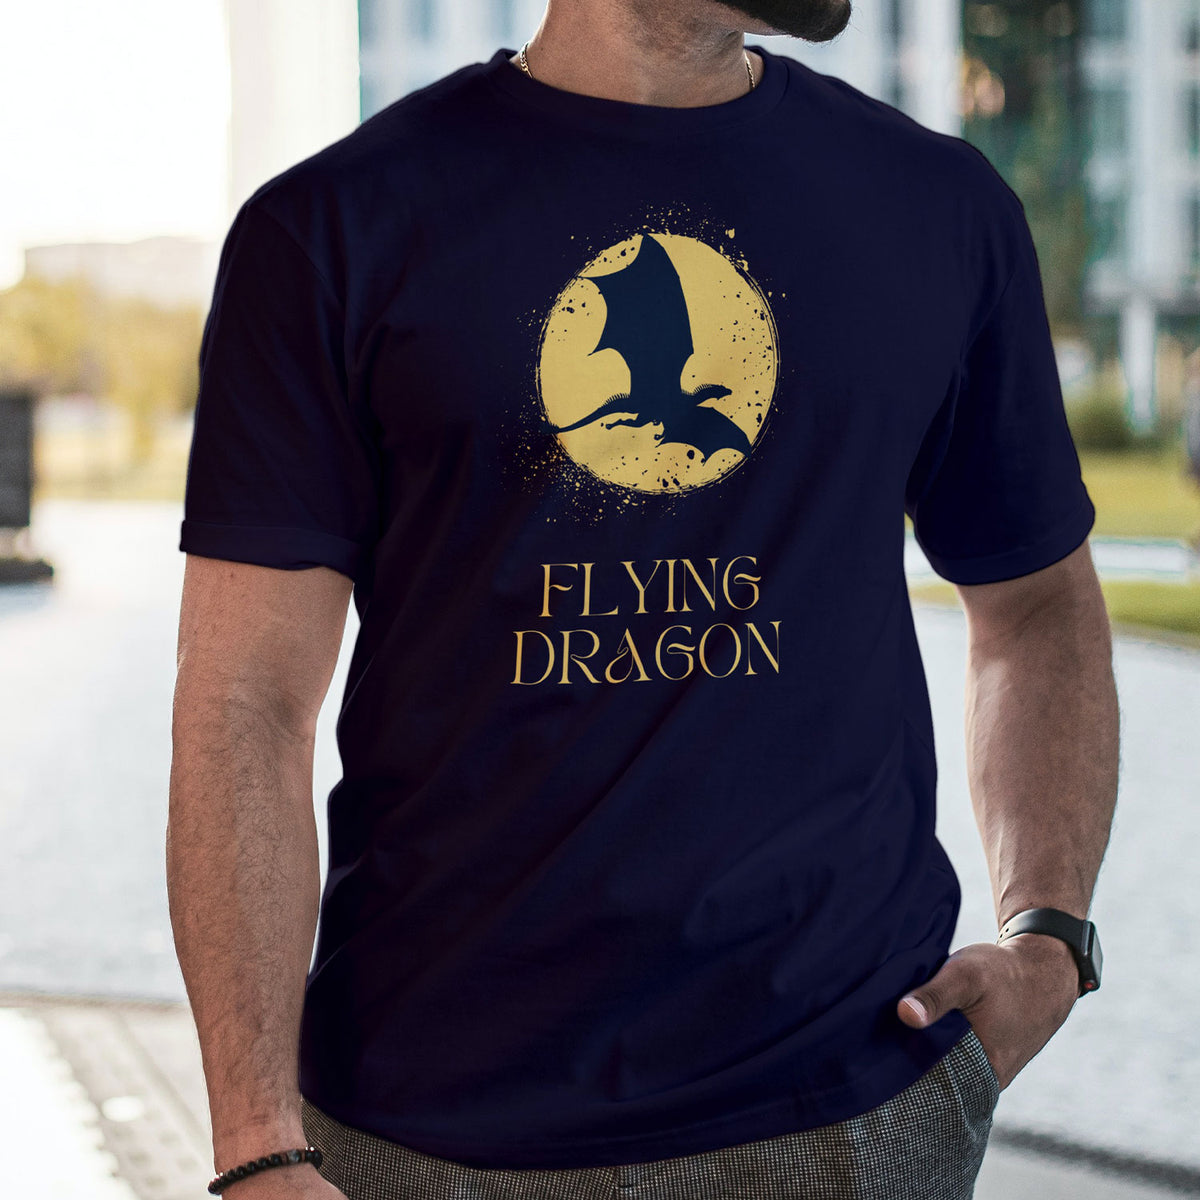 Flying Dragon Printed T-shirt For Men